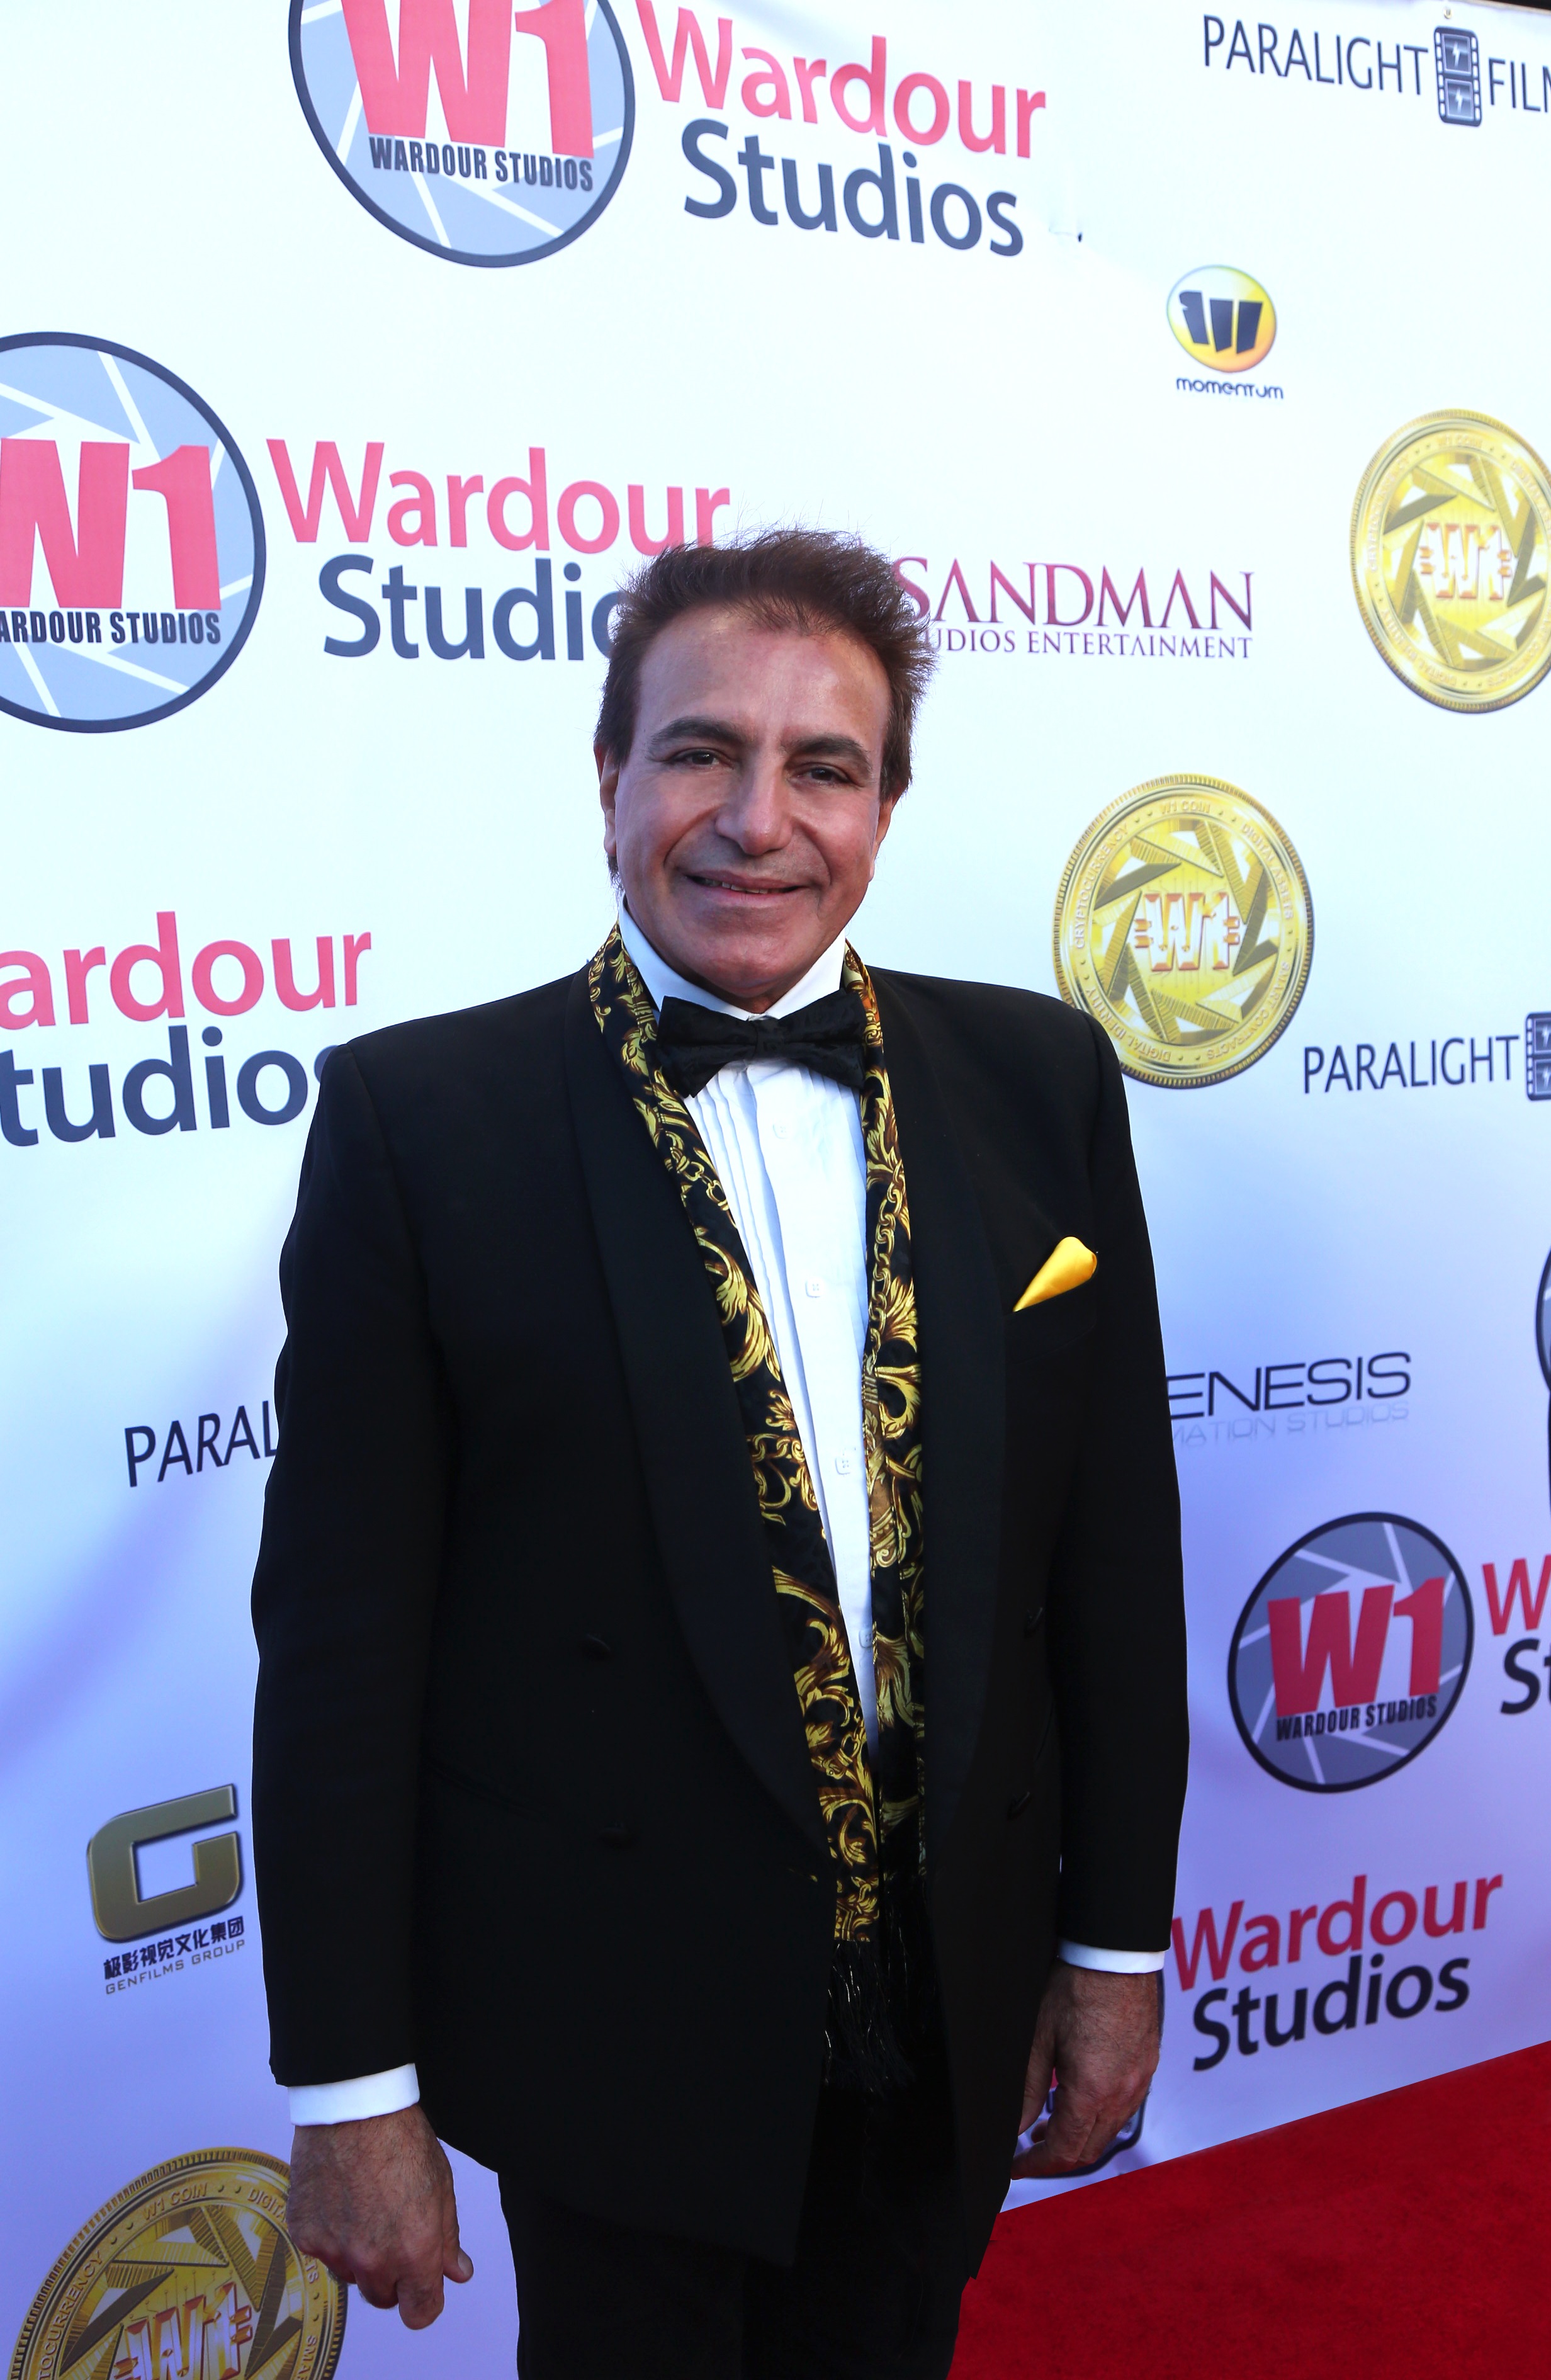 Steven Nia, Chairman and CEO of Wardour Studios